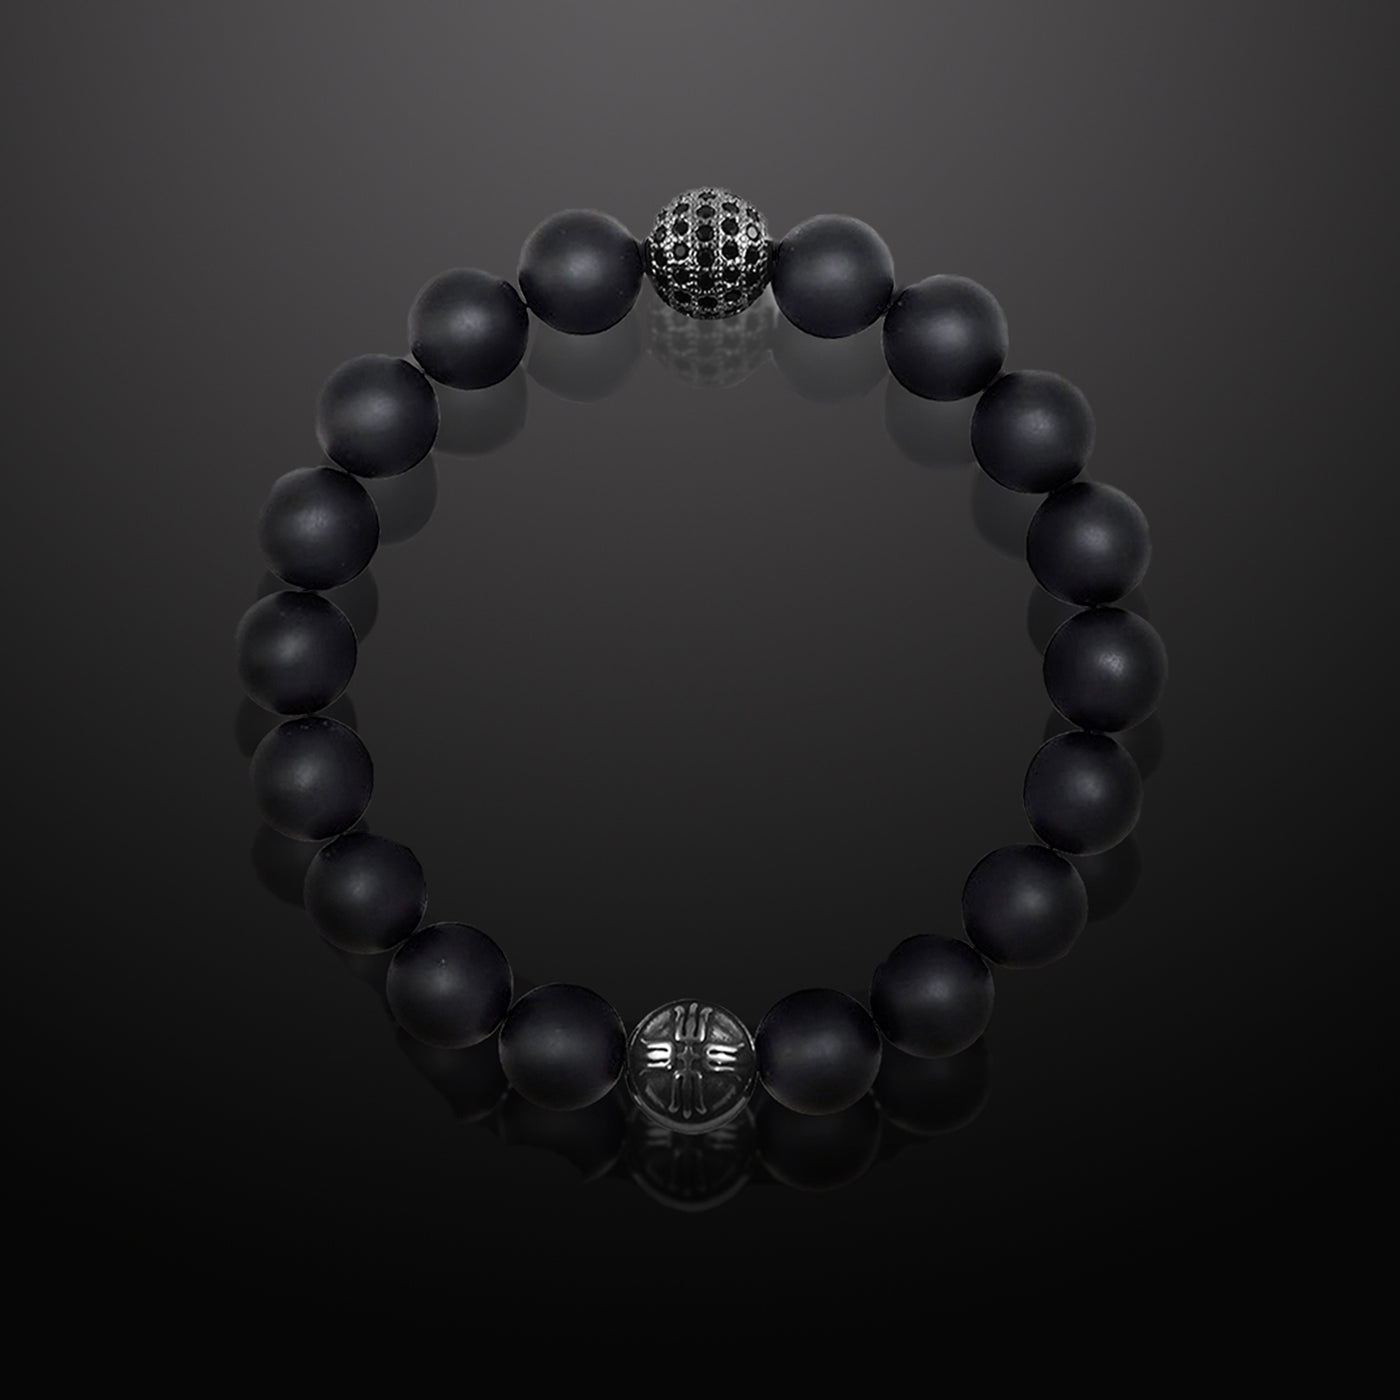 Orion Black Agate and Pavé CZ Diamonds Beaded Bracelet for Men, 10mm